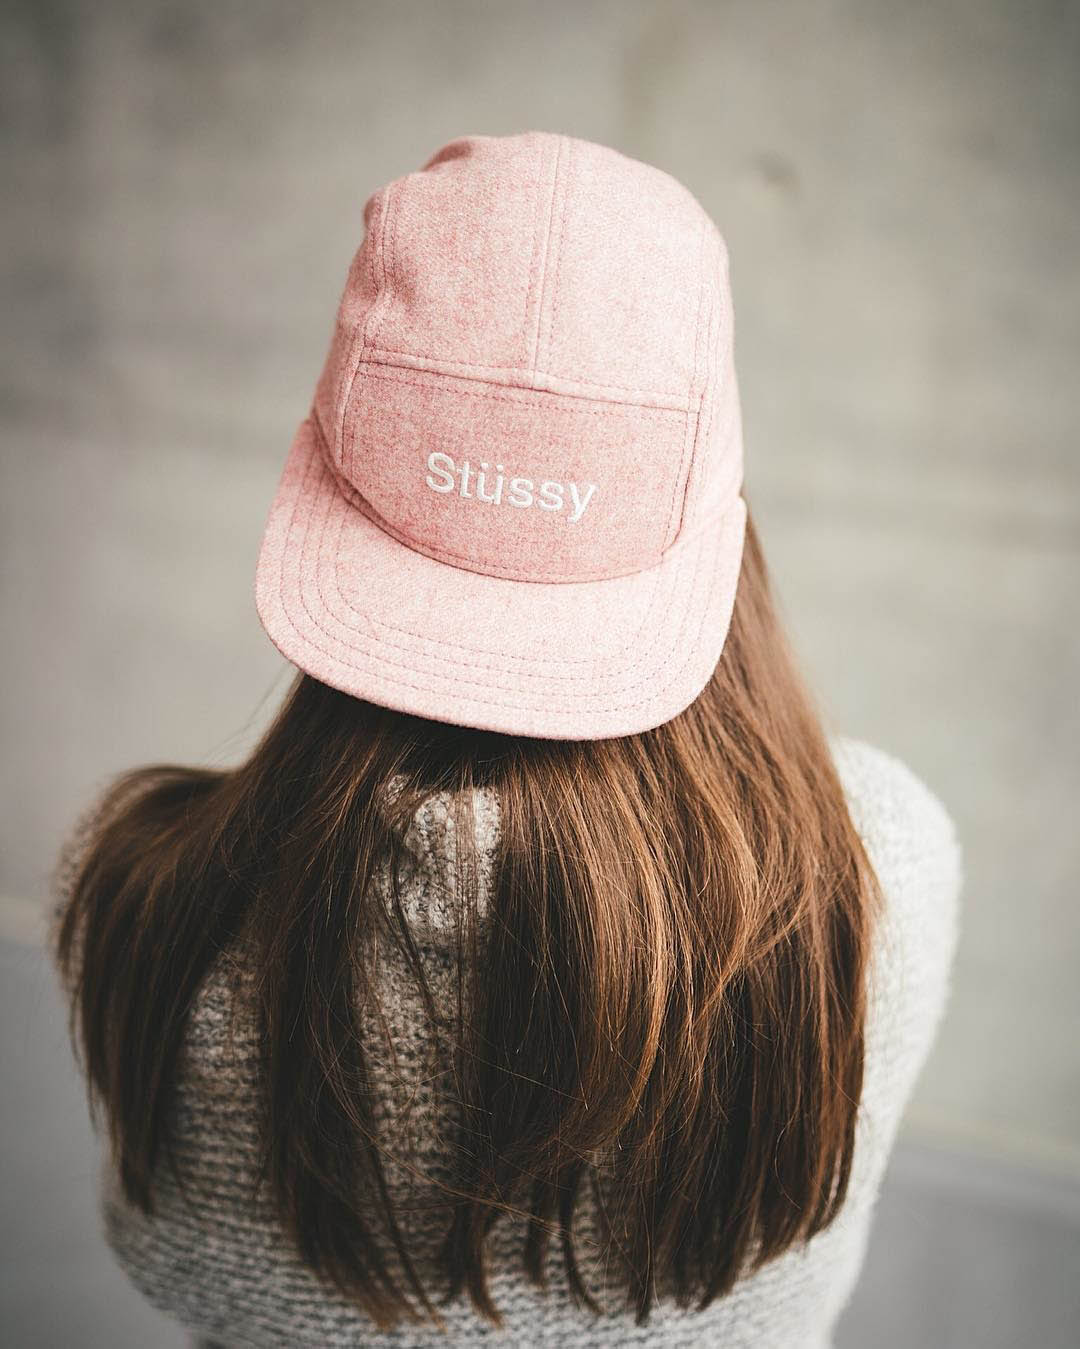 Stussy women's cap #throwback